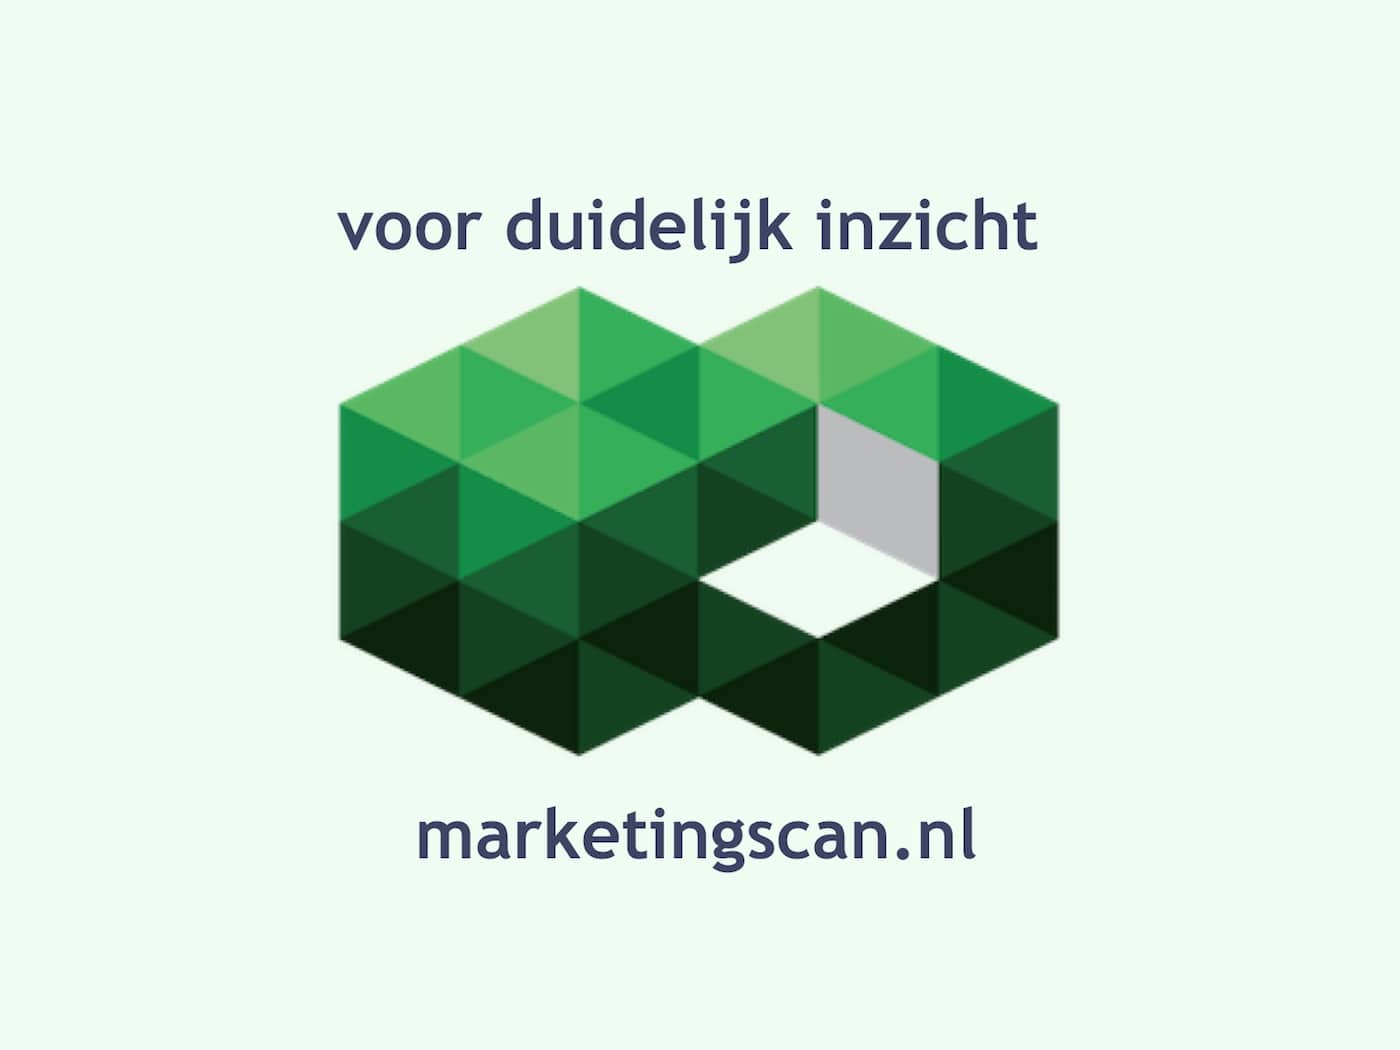 (c) Marketingscan.nl